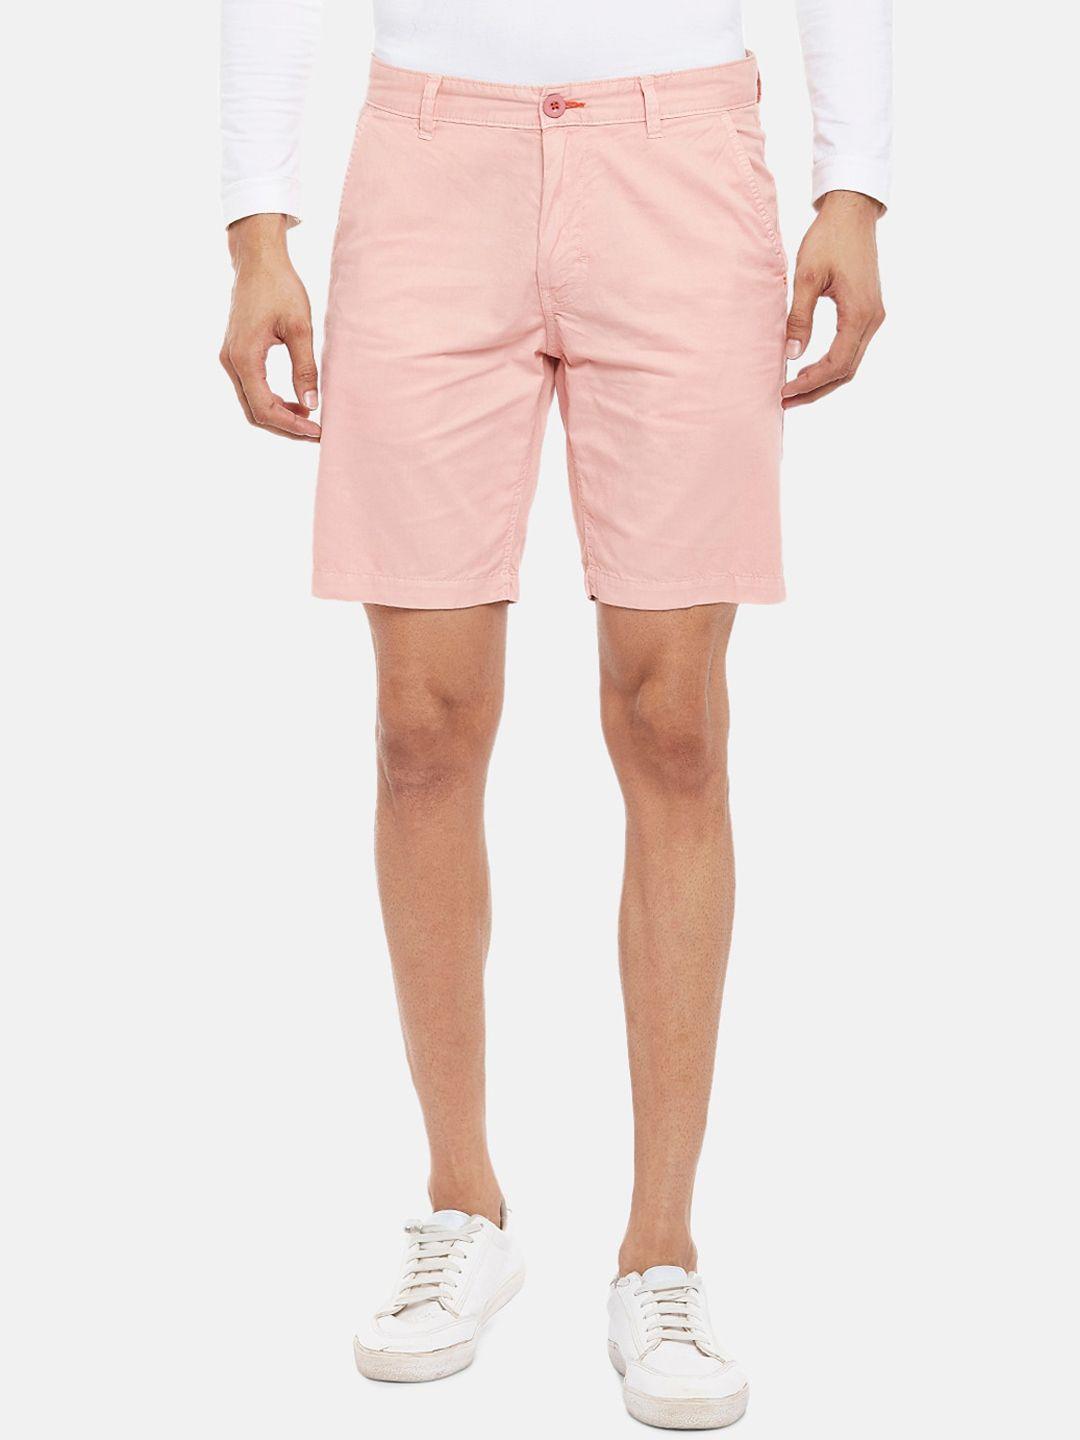 urban ranger by pantaloons men pink solid pure cotton slim fit regular shorts